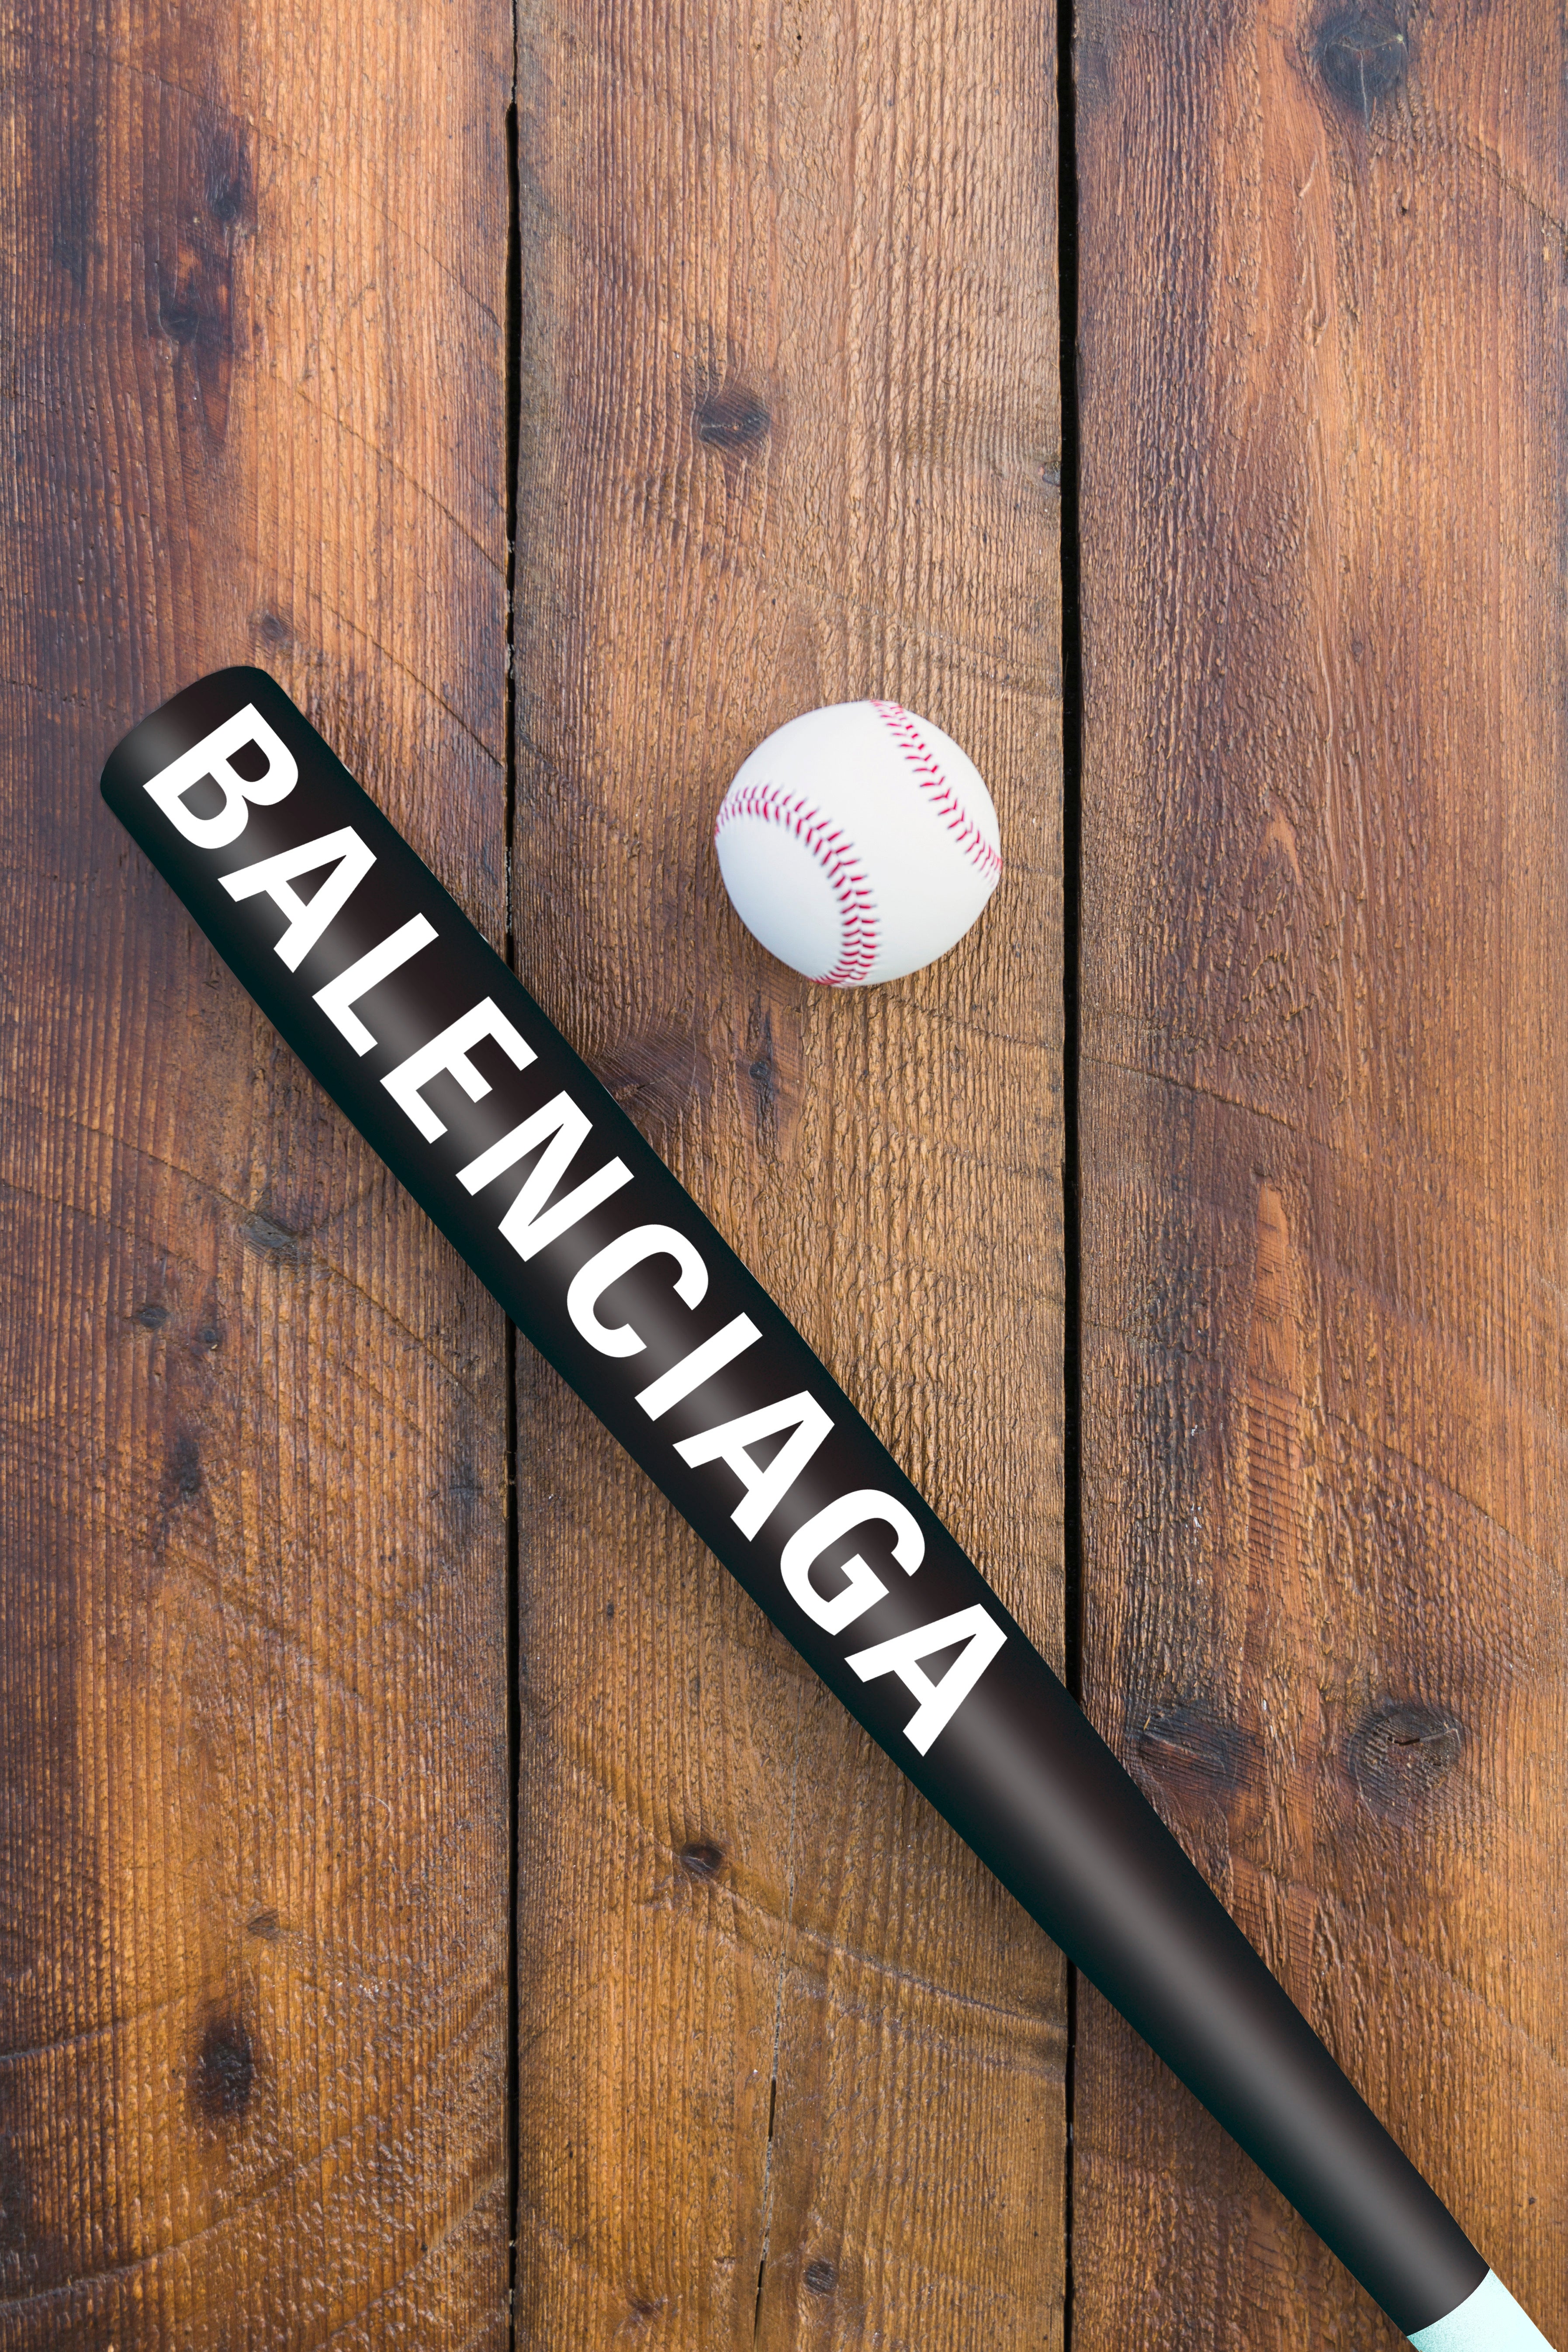 Batte Baseball Balenciaga – The French Custom